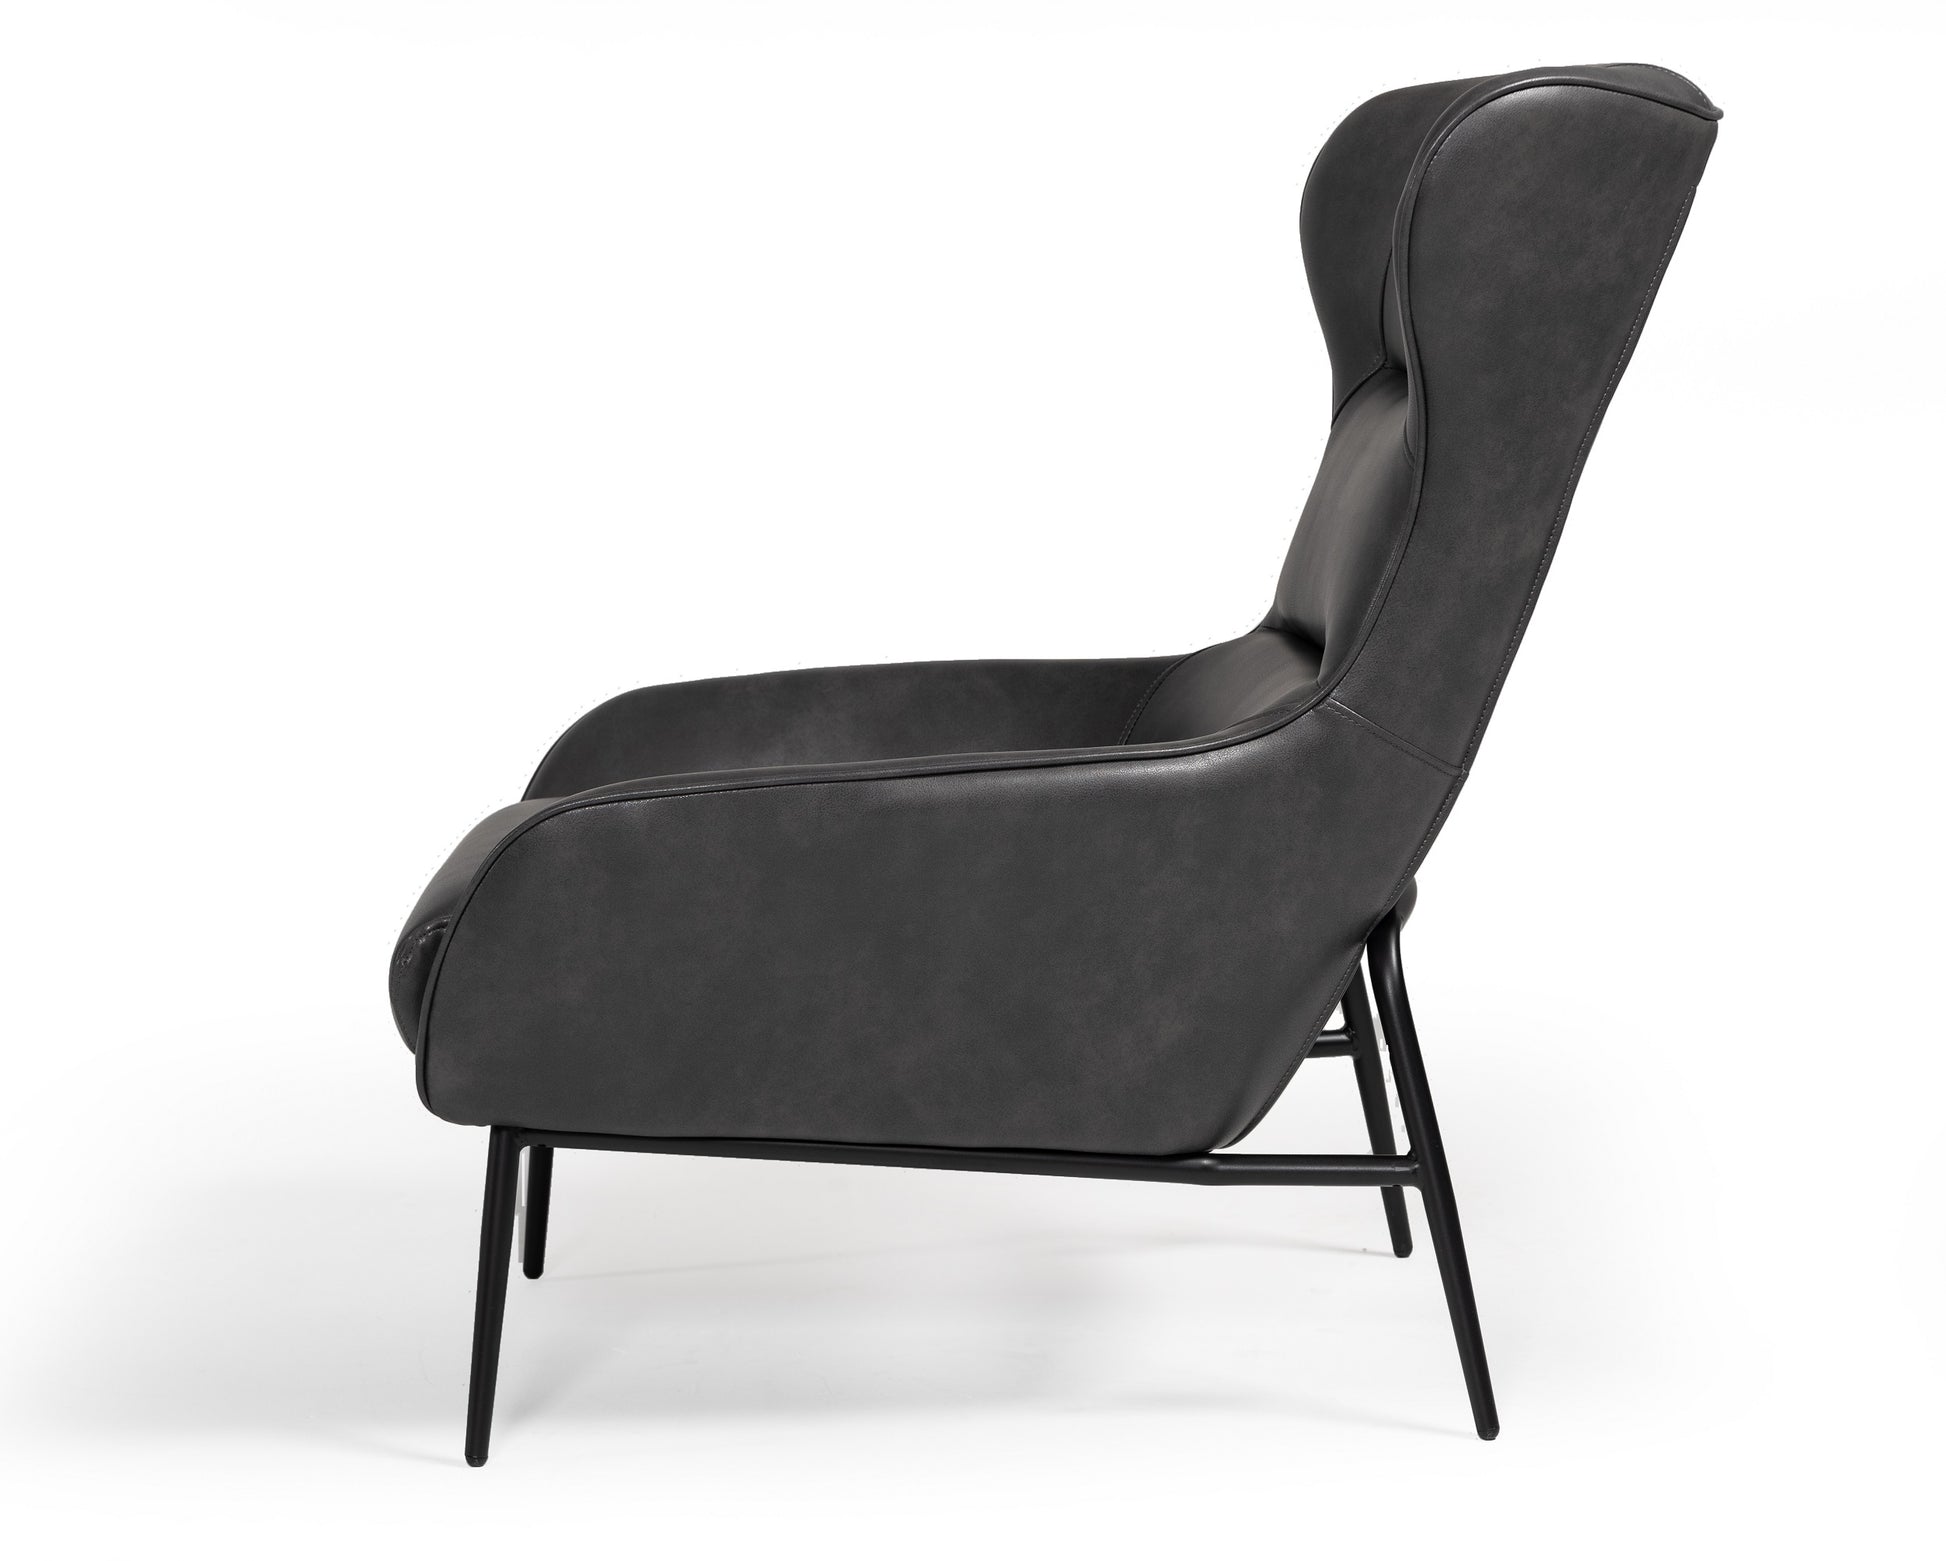 Divani Casa Susan Modern Dark Grey Leatherette Lounge Chair-3